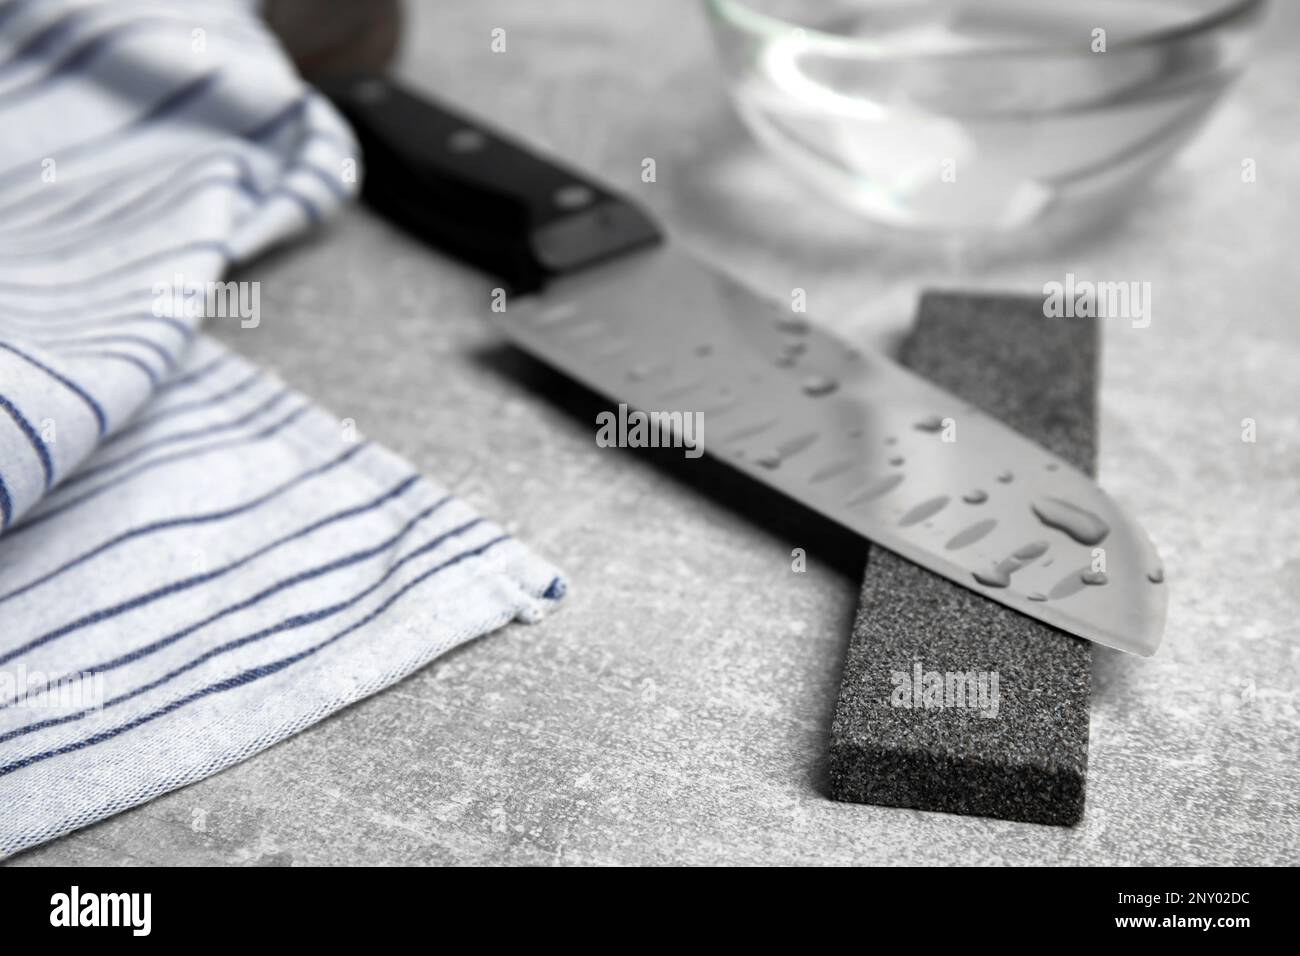 https://c8.alamy.com/comp/2NY02DC/sharpening-stone-and-knife-on-grey-table-closeup-2NY02DC.jpg